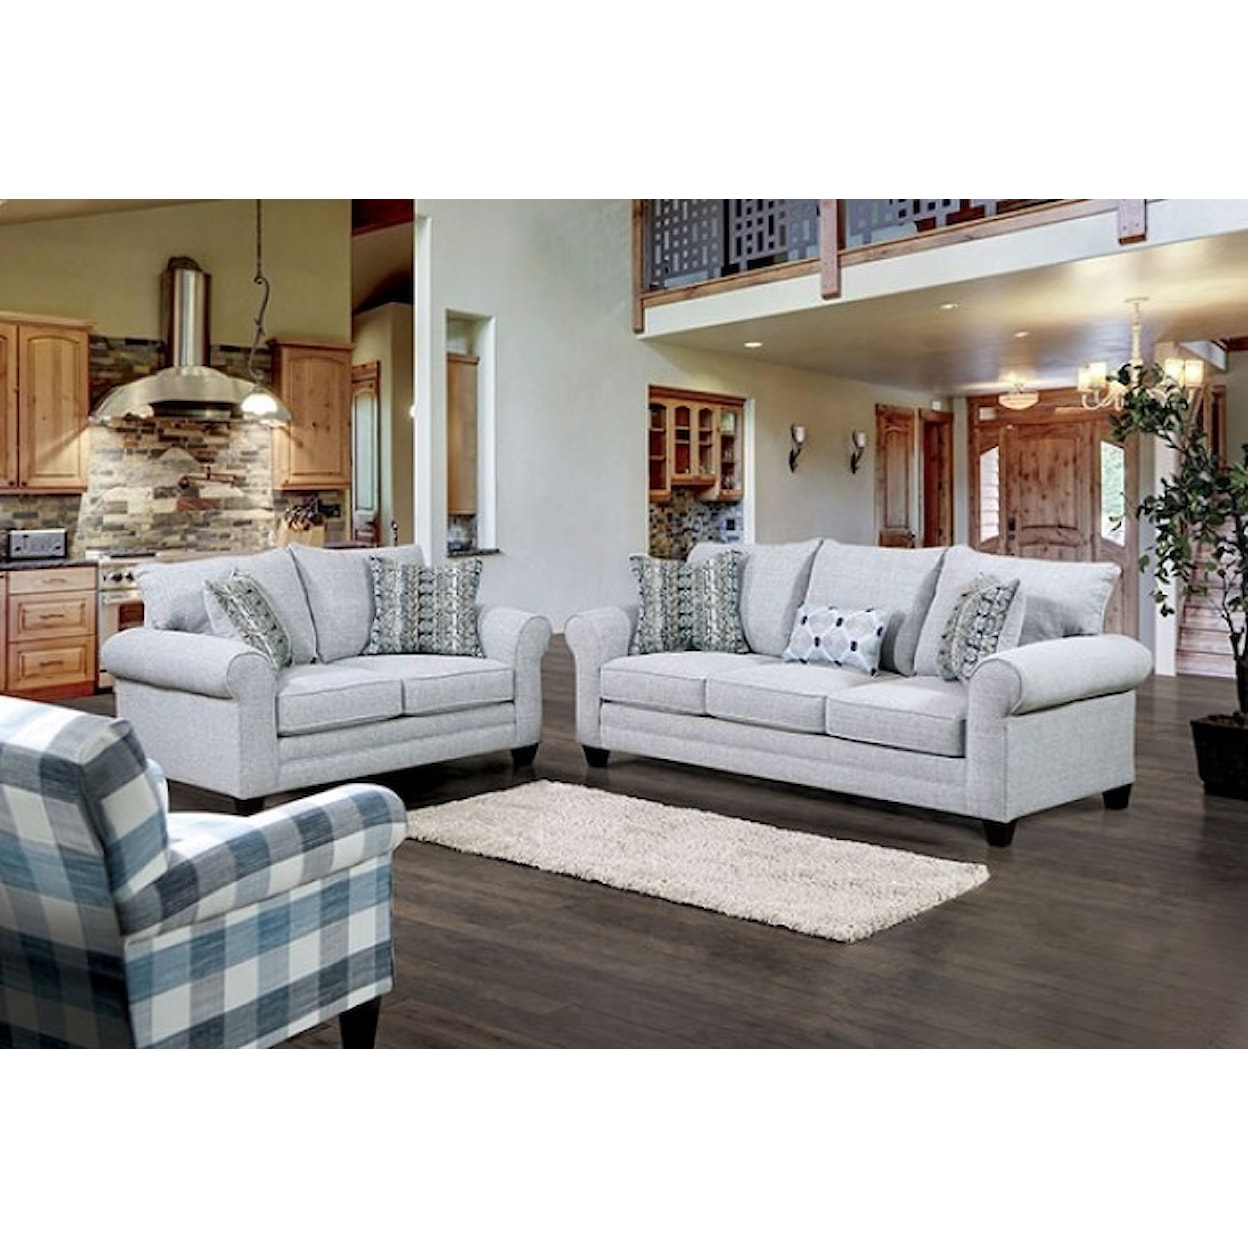 Furniture of America Aberporth Living Room Set 